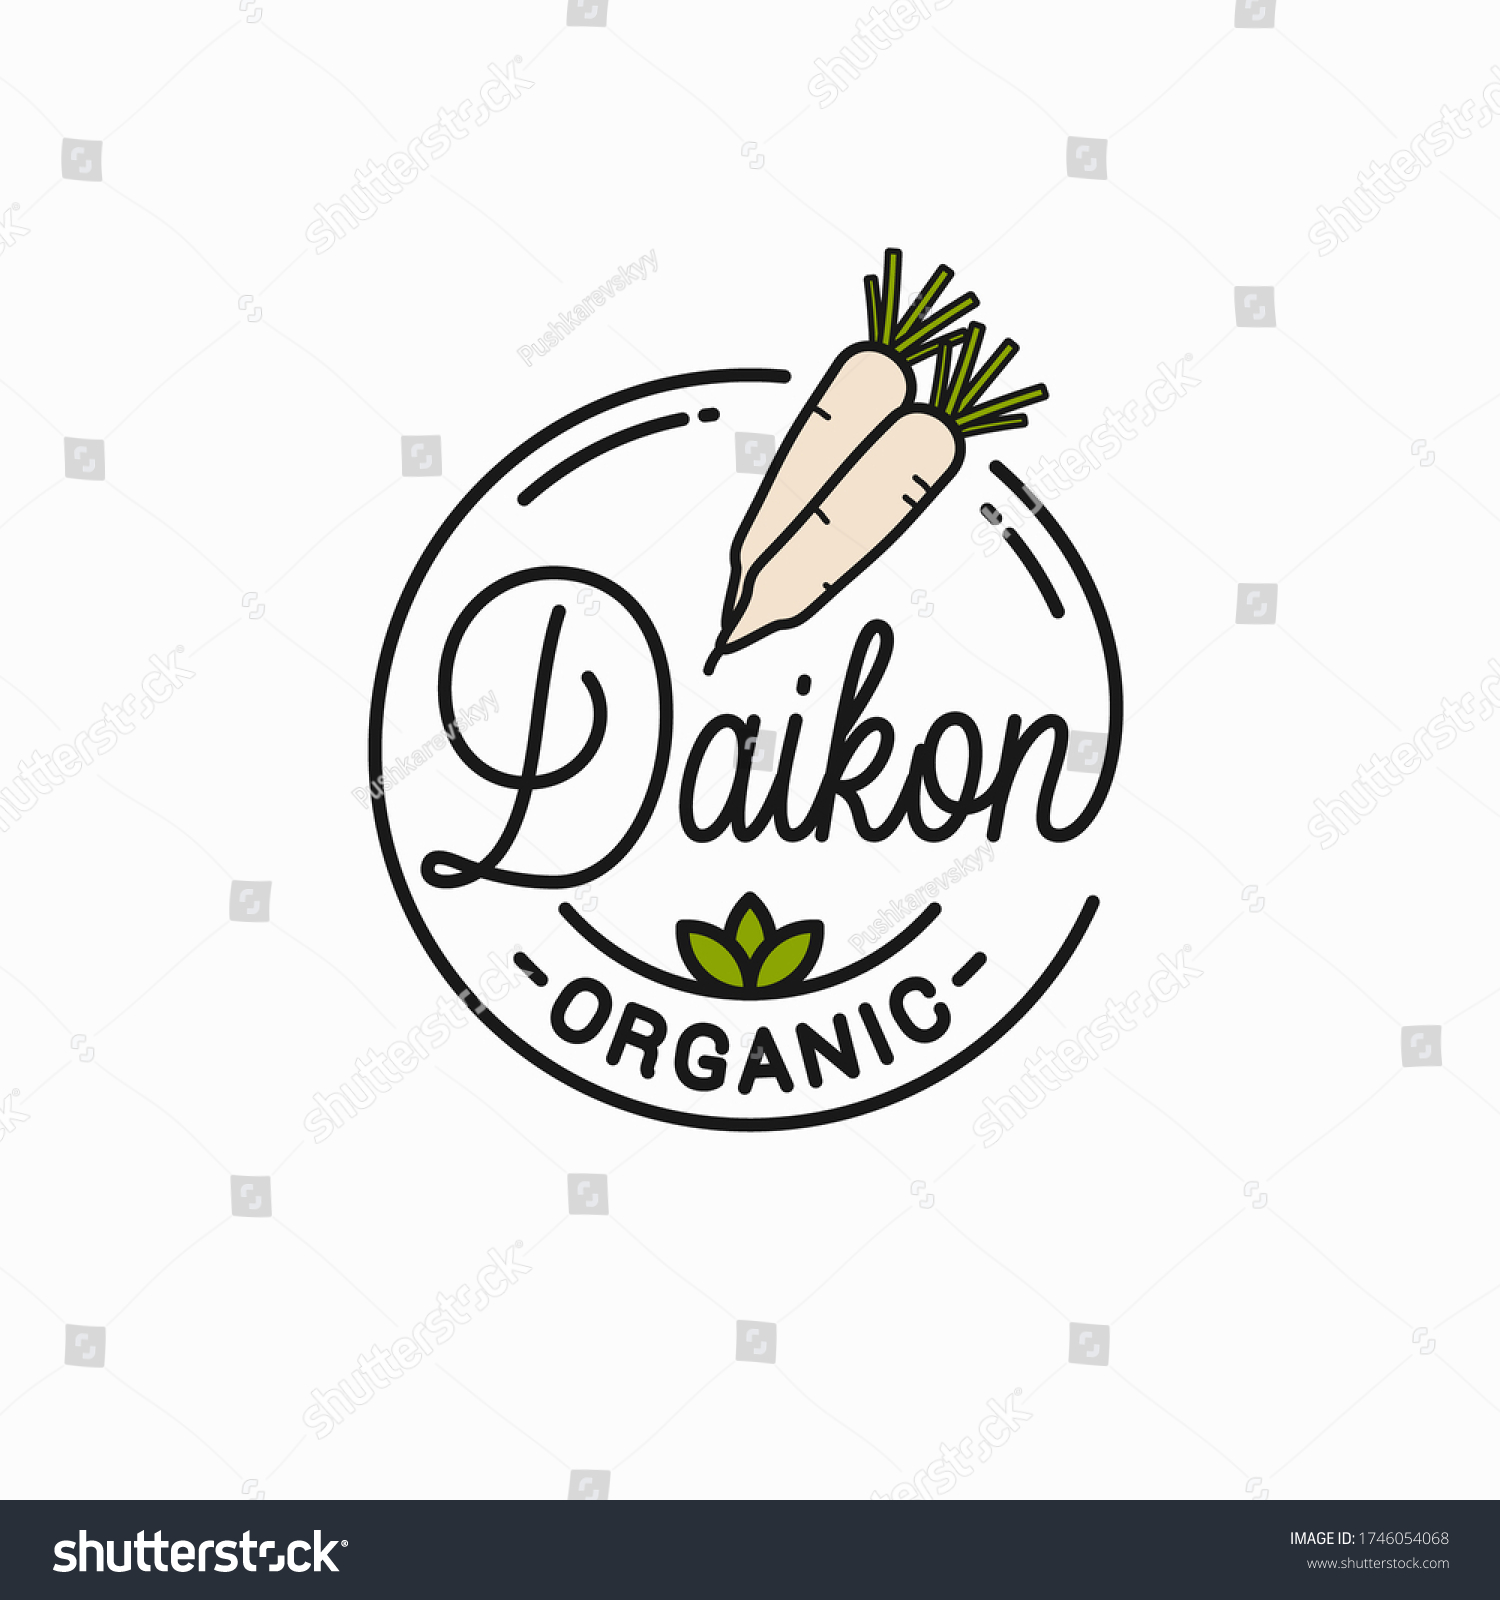 Daikon radishes logo. Round linear logo of daikons on white background #1746054068